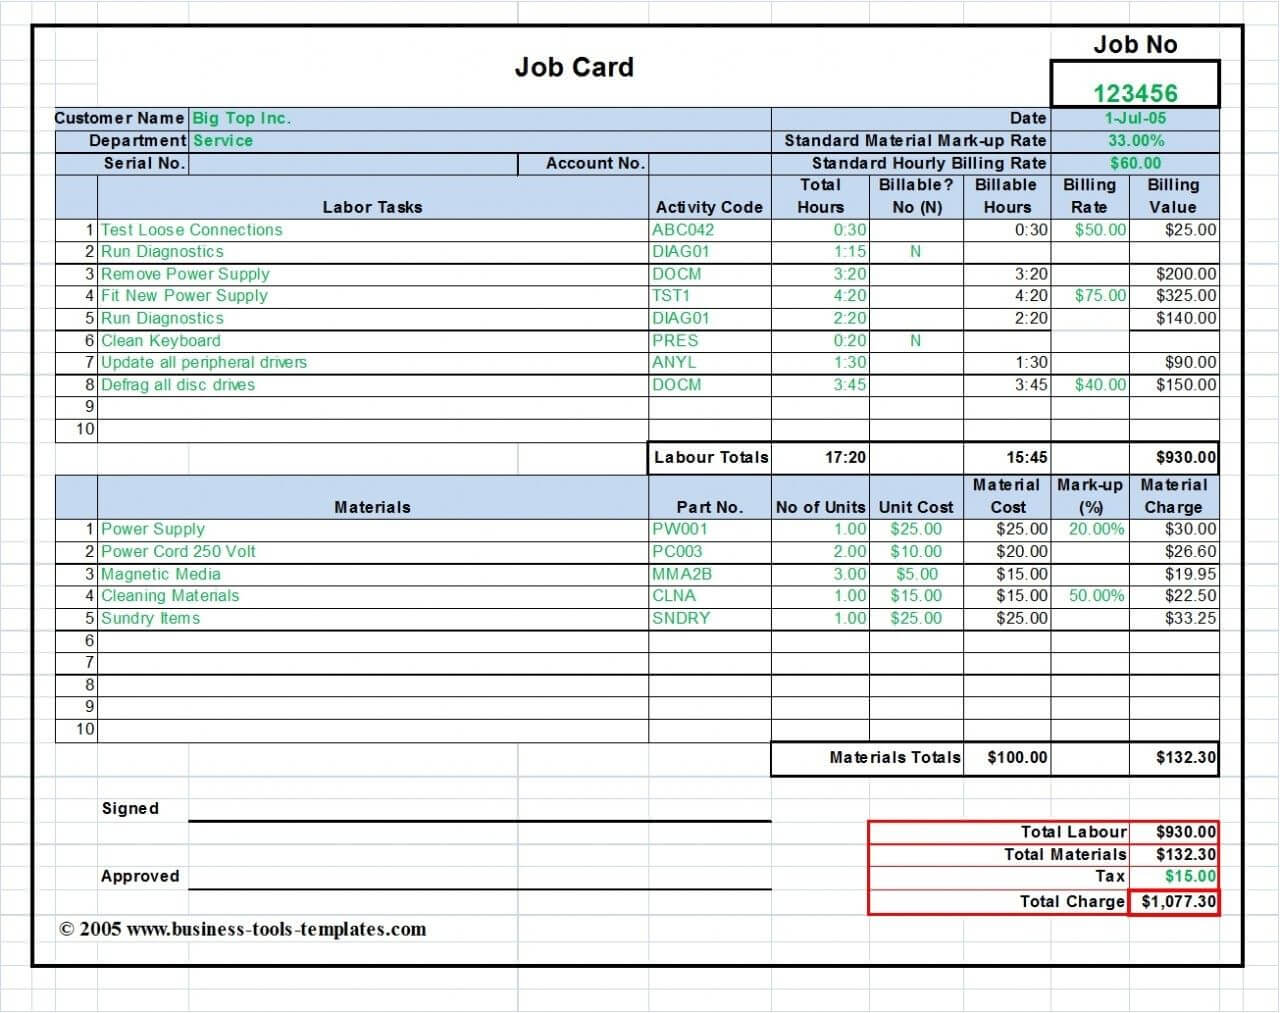 Workshop Job Card, Labor & Material Cost Estimator With Regard To Sample Job Cards Templates